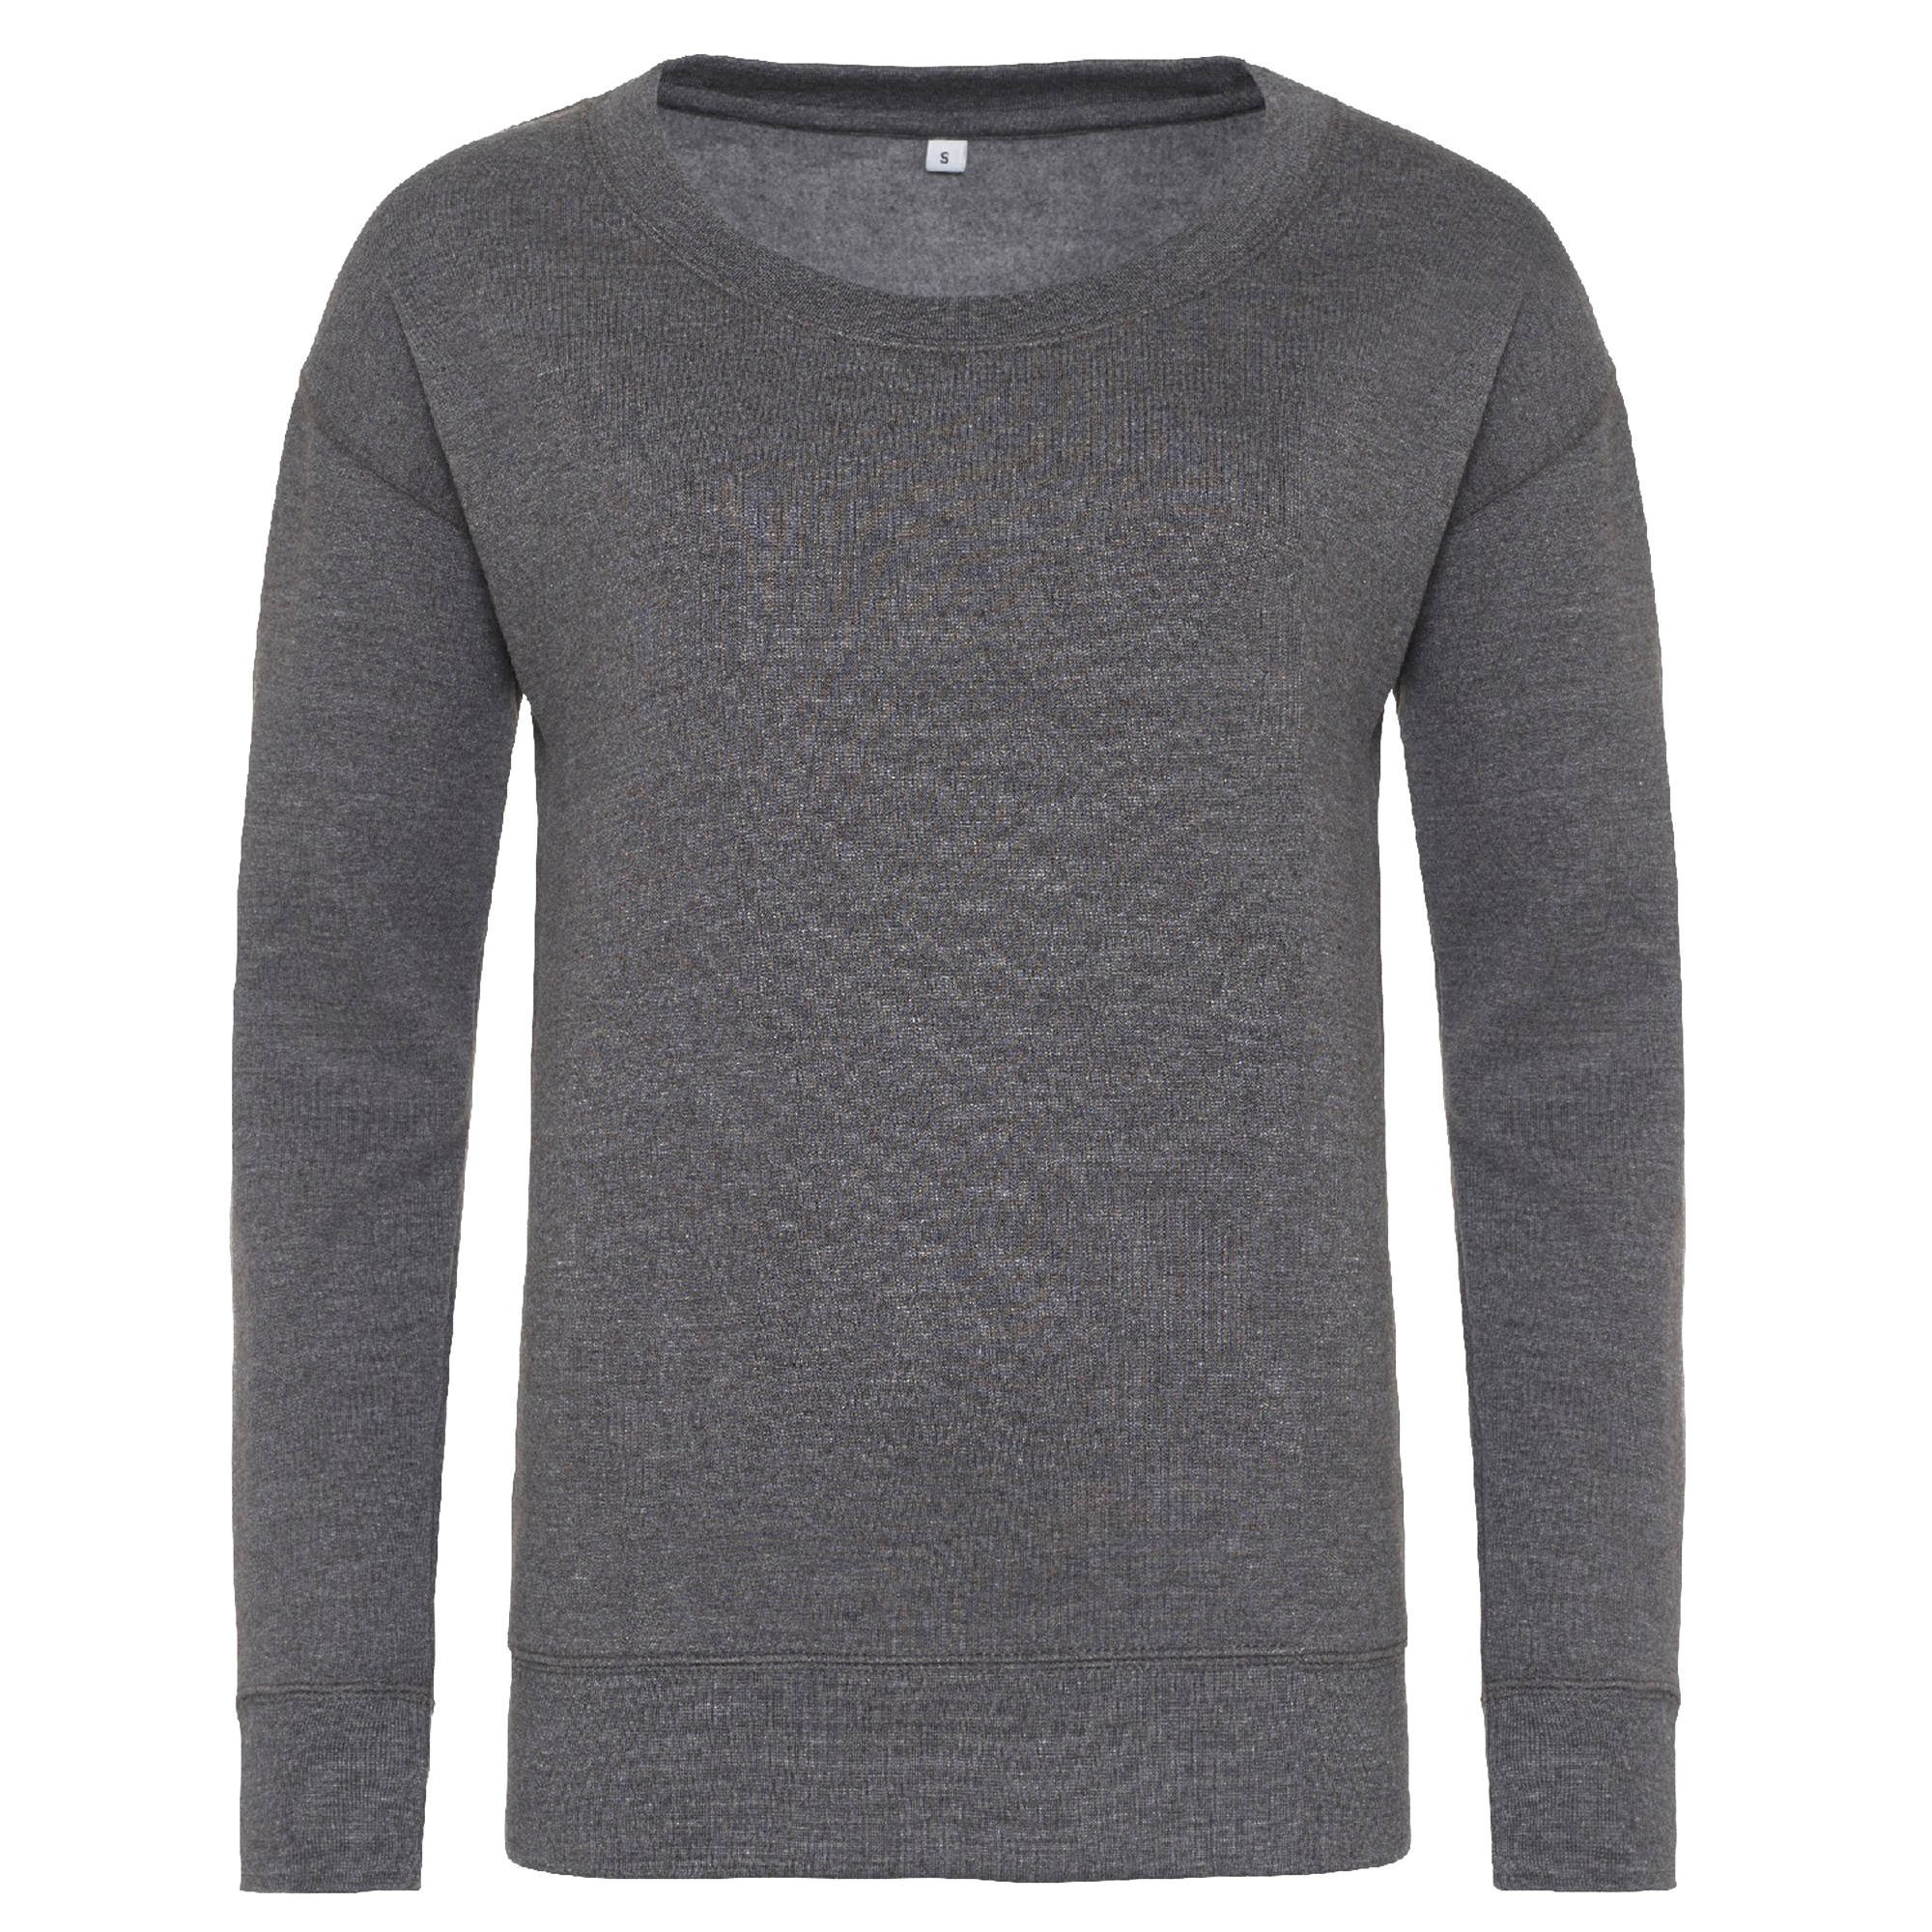 Sweatshirt Moderna Awdis - gris-oscuro - 